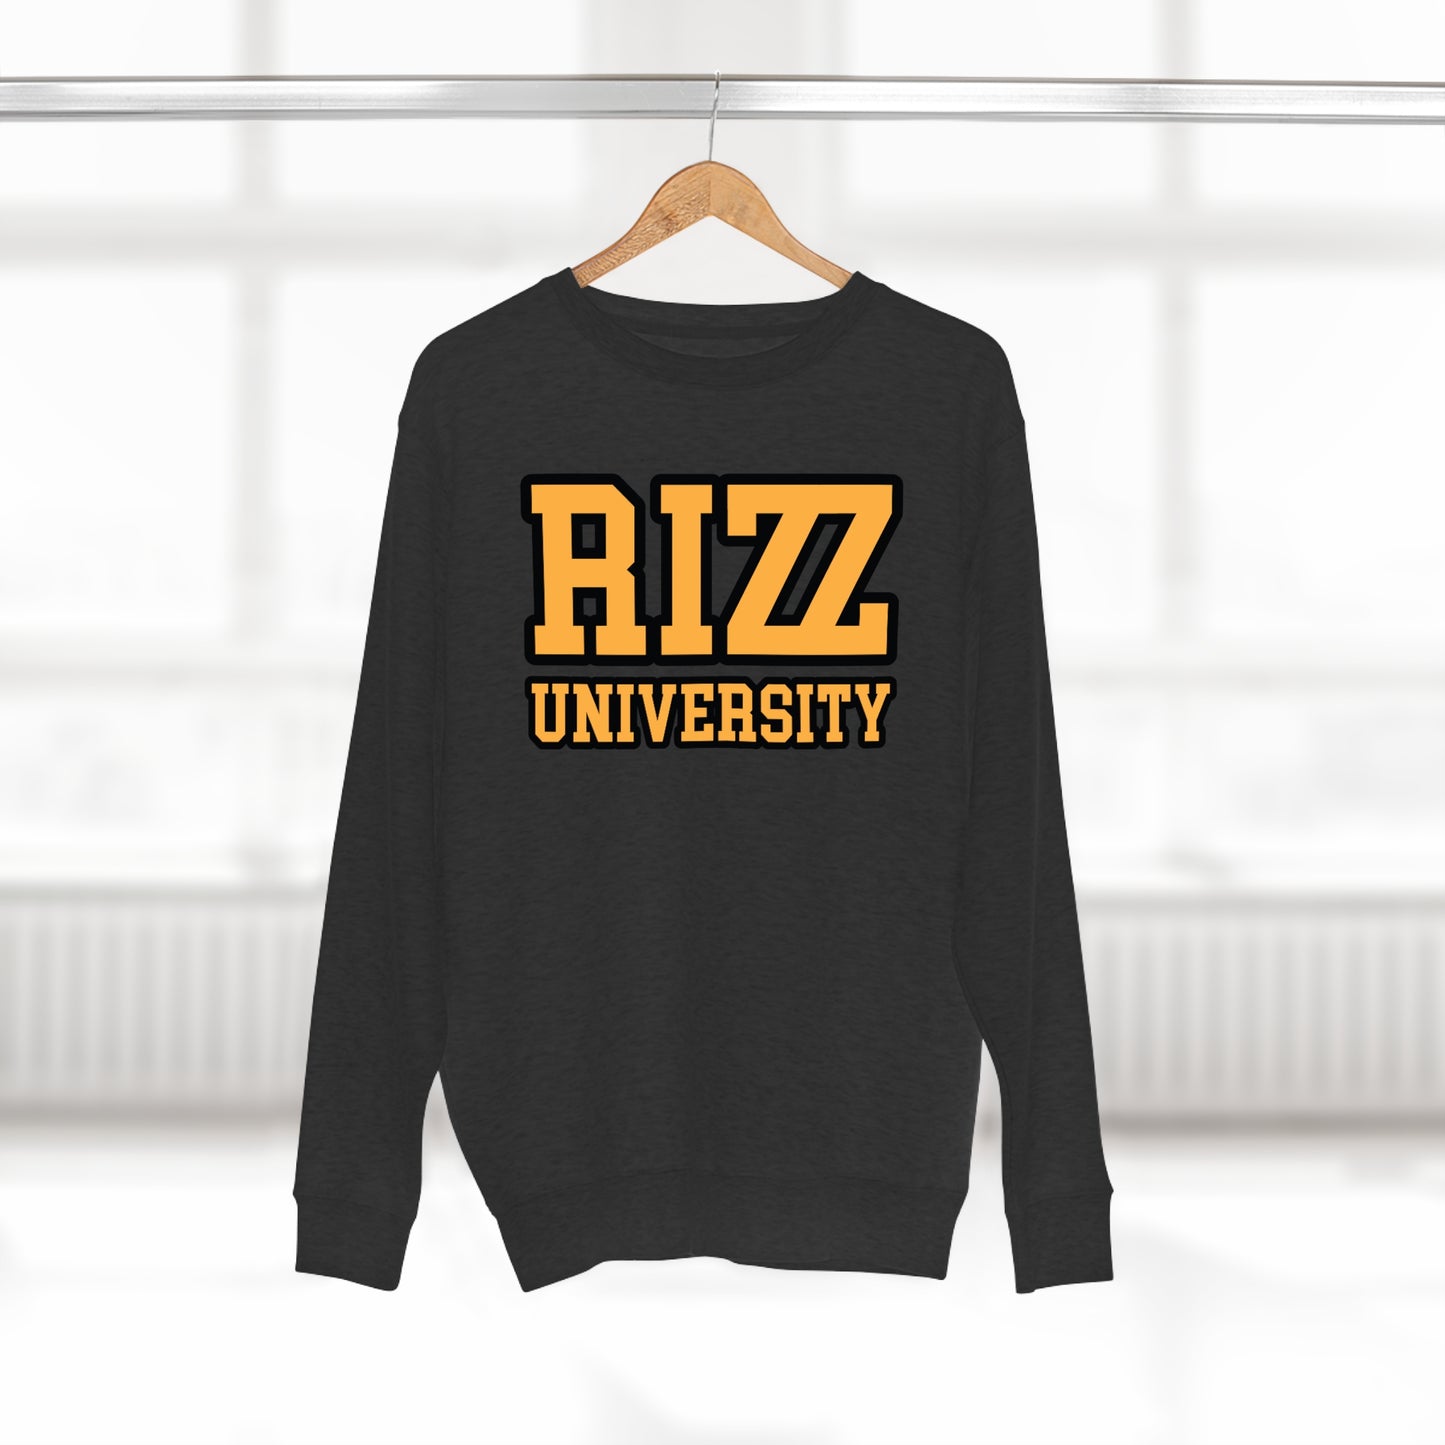 Rizz University Crewneck